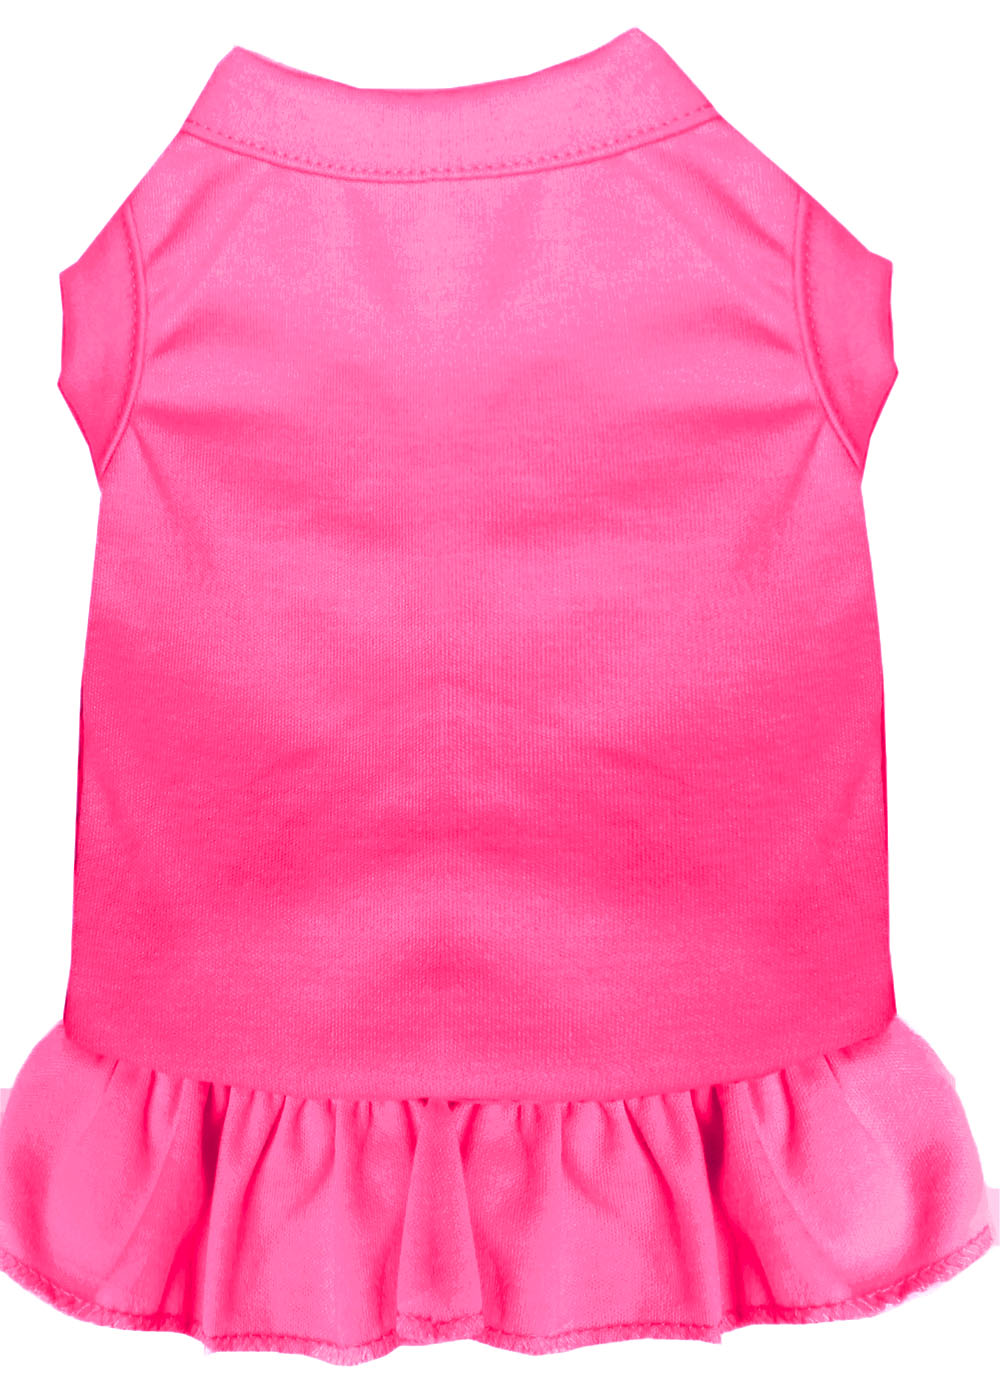 Plain Pet Dress Bright Pink XL